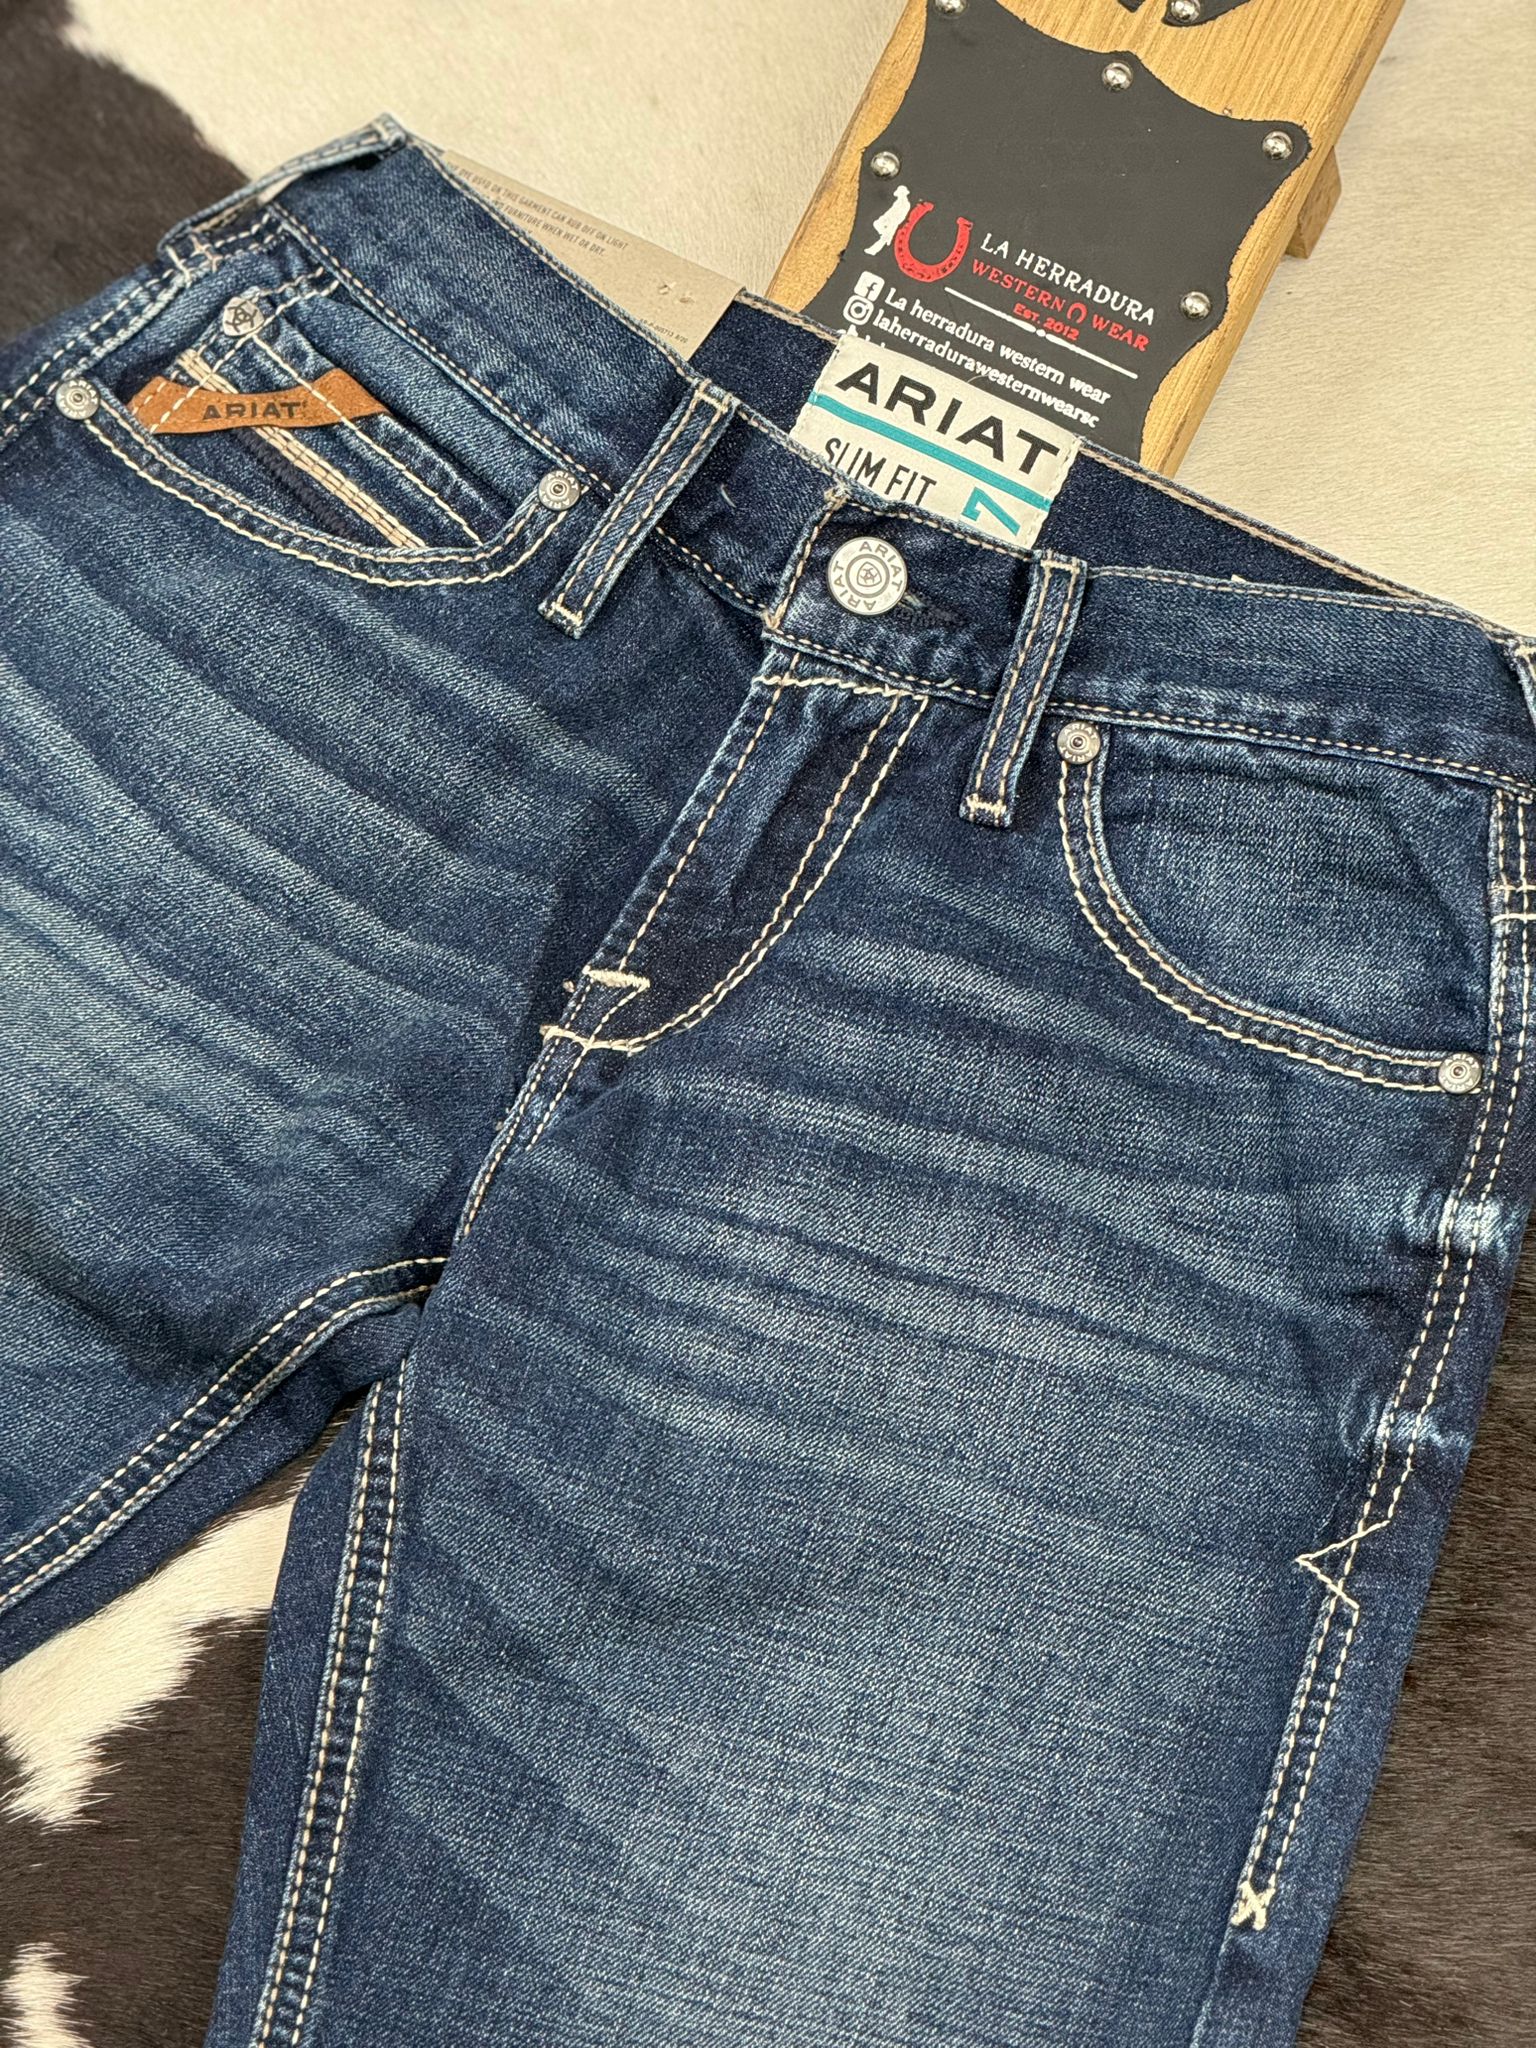 Ariat Mens Jeans Stirling DRAKE M7 Slim Fit Straight Leg